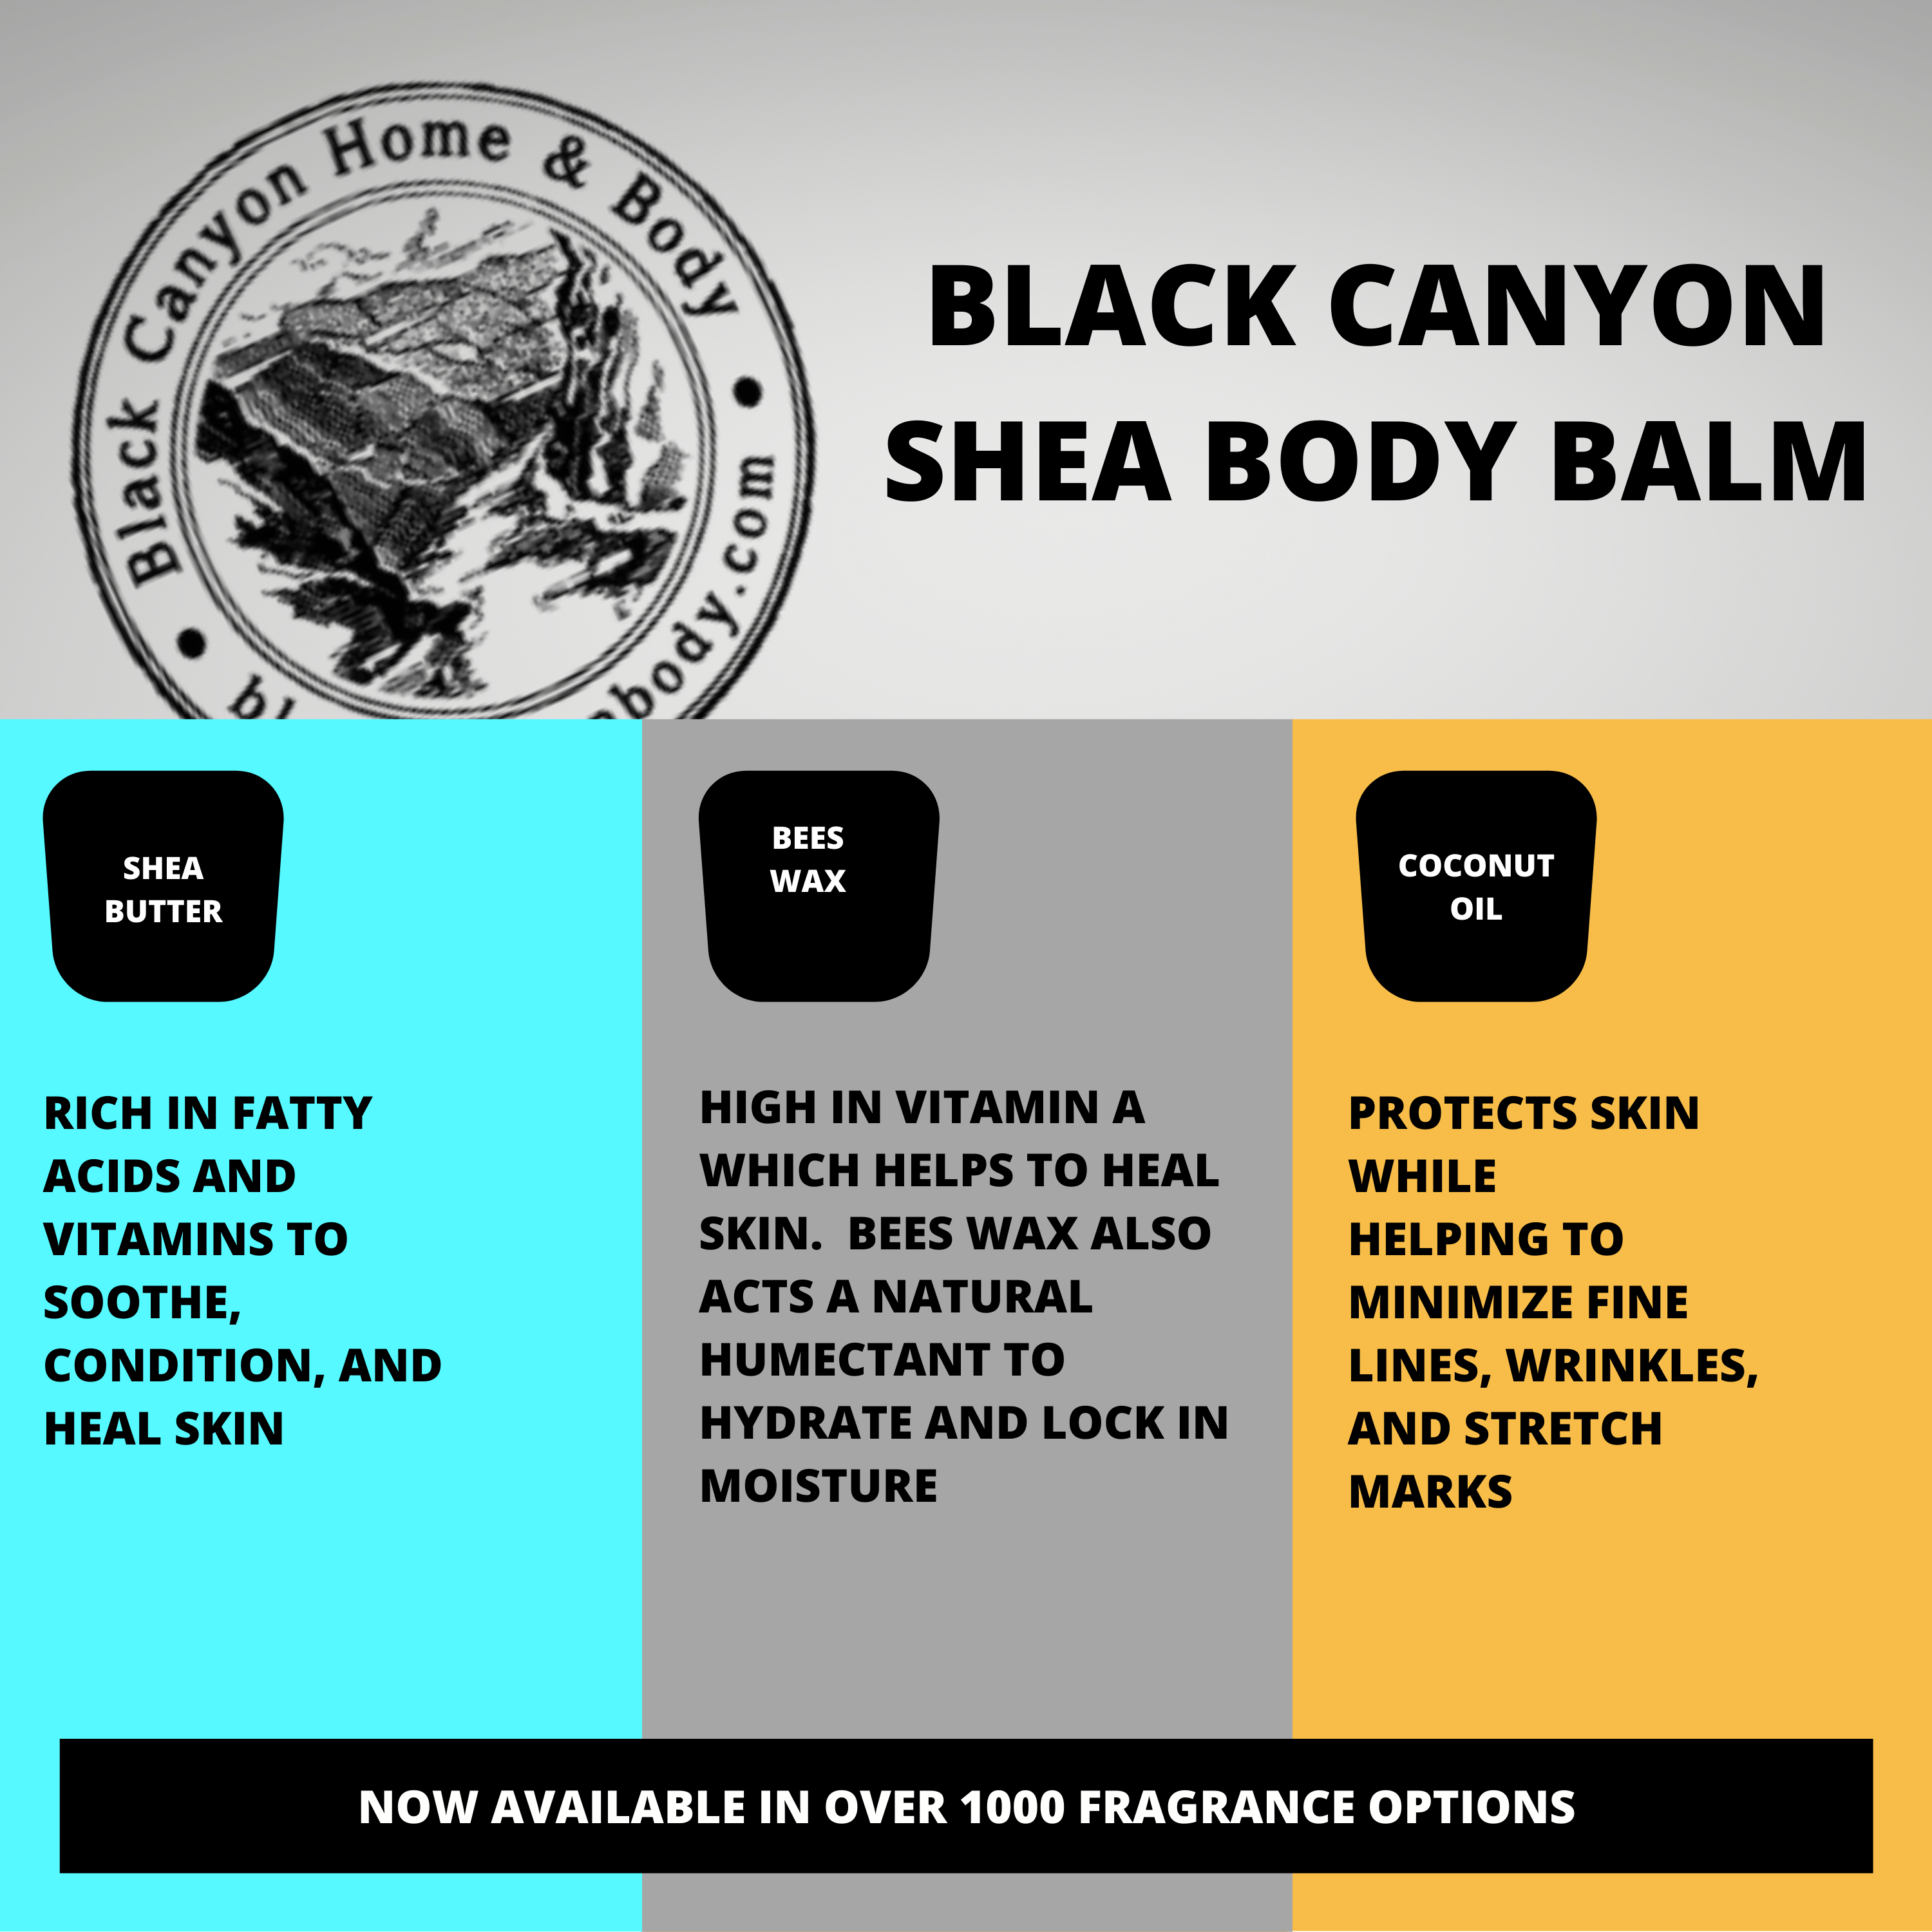 Black Canyon Lemon Tart Scented Natural Body Balm with Shea